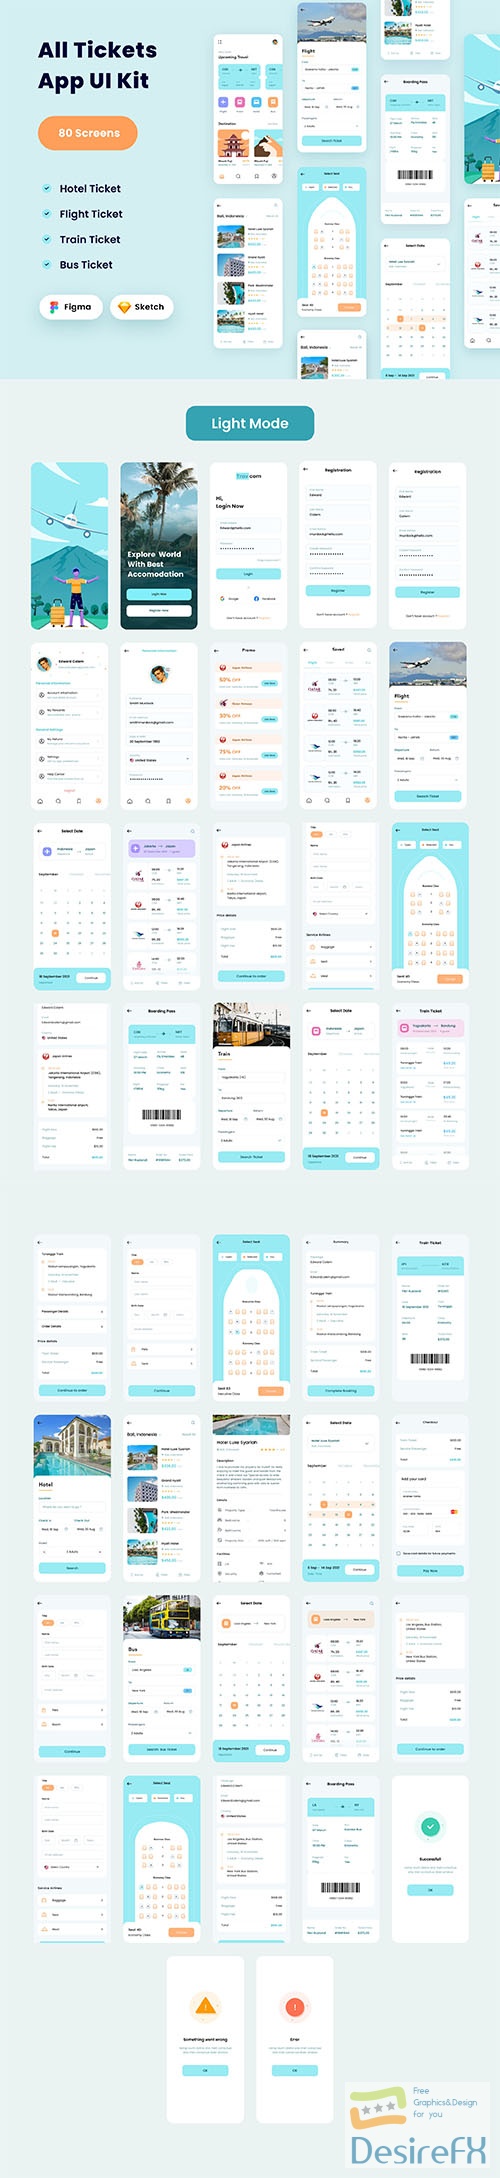 Booking Ticketing Flight, Hotel, Train, Bus App UI Kit UI8